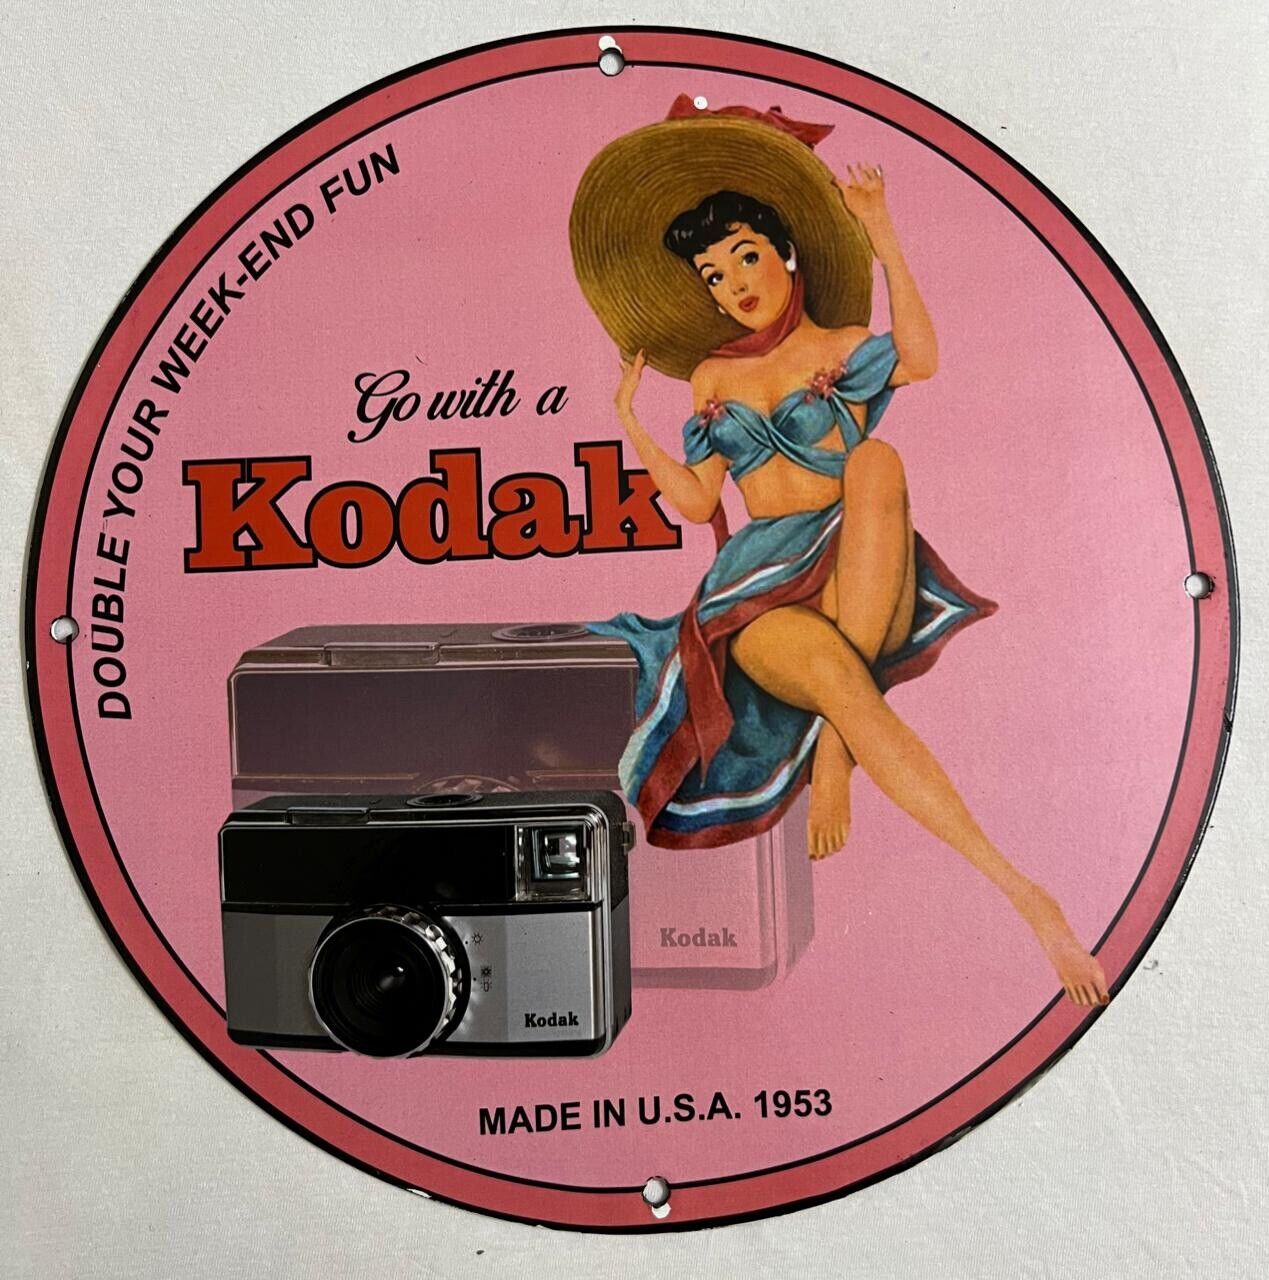 Premium KODAK USA 1953 Pinup Porcelain Enamel Sign.